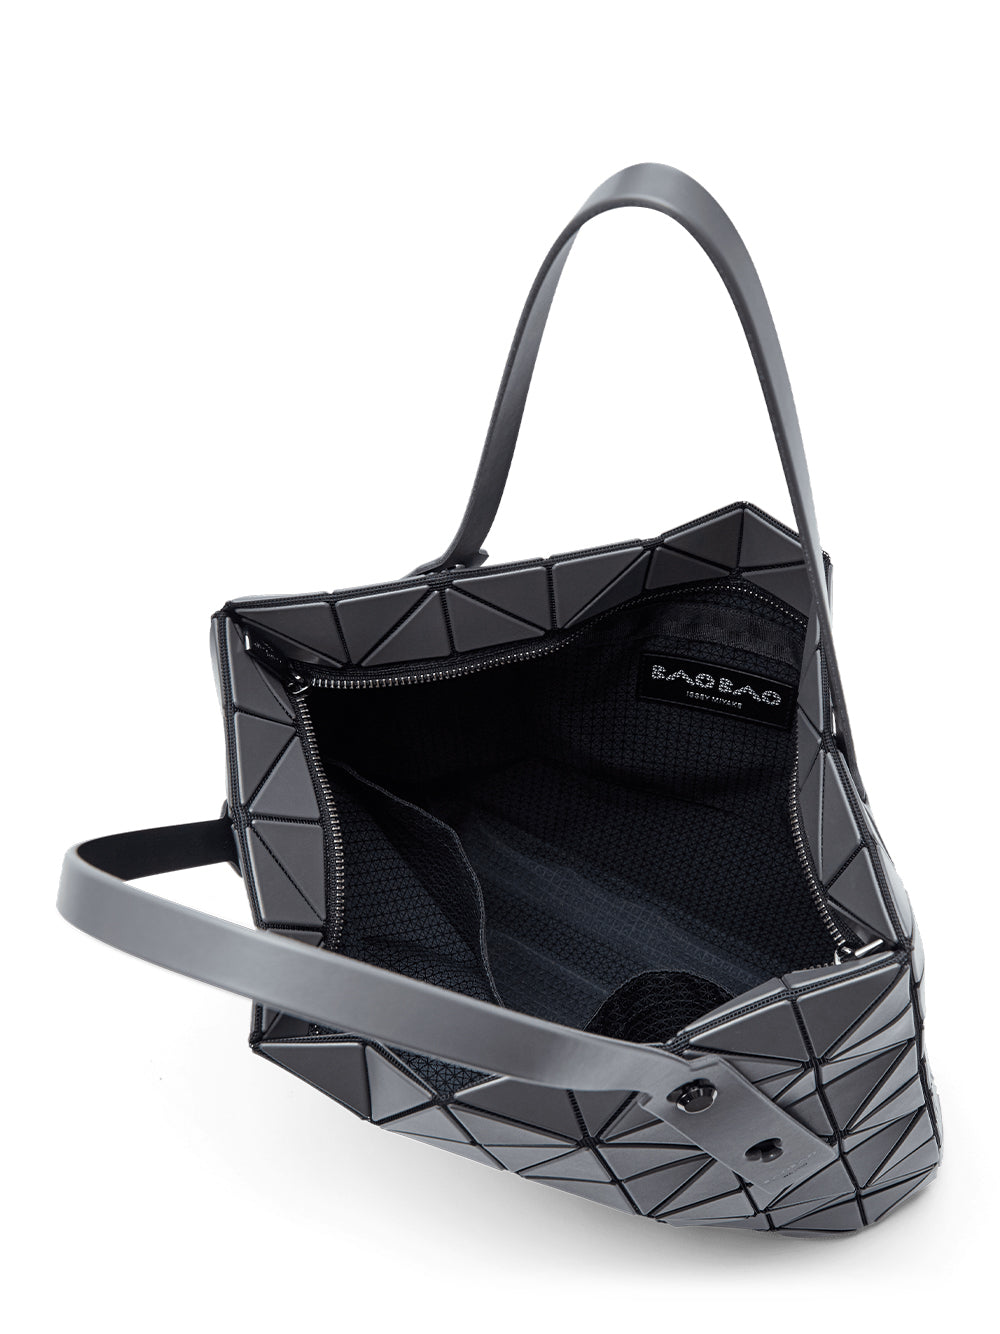 ROCK MATTE Handbag (Small) (Charcoal Gray)